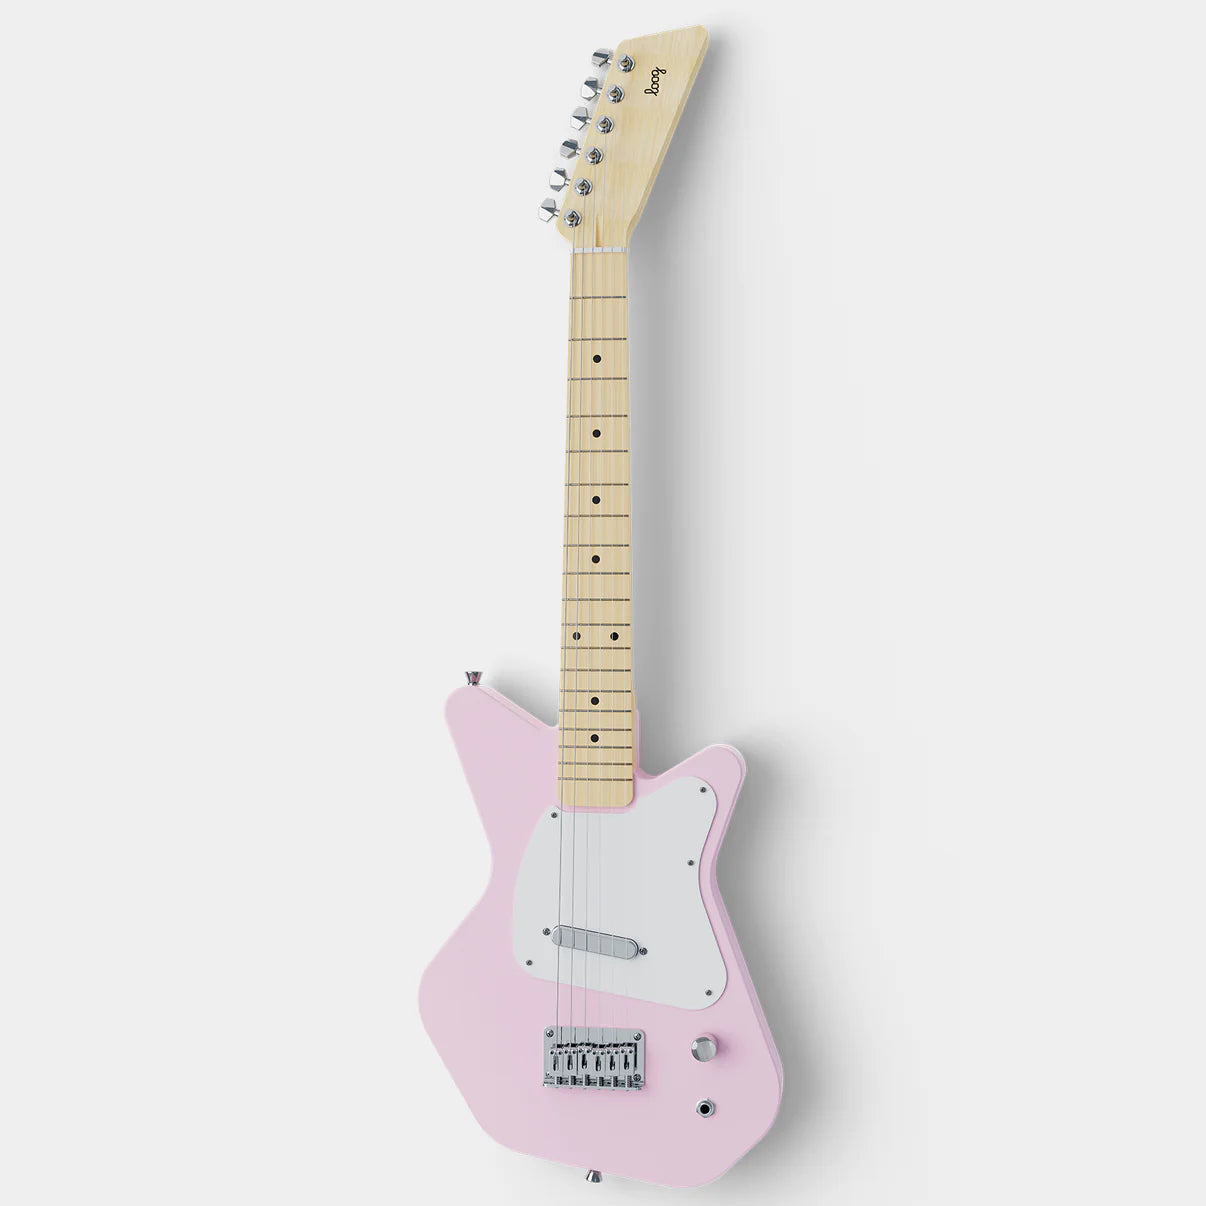 Loog Pro VI Electric Guitar Guitars Pink 